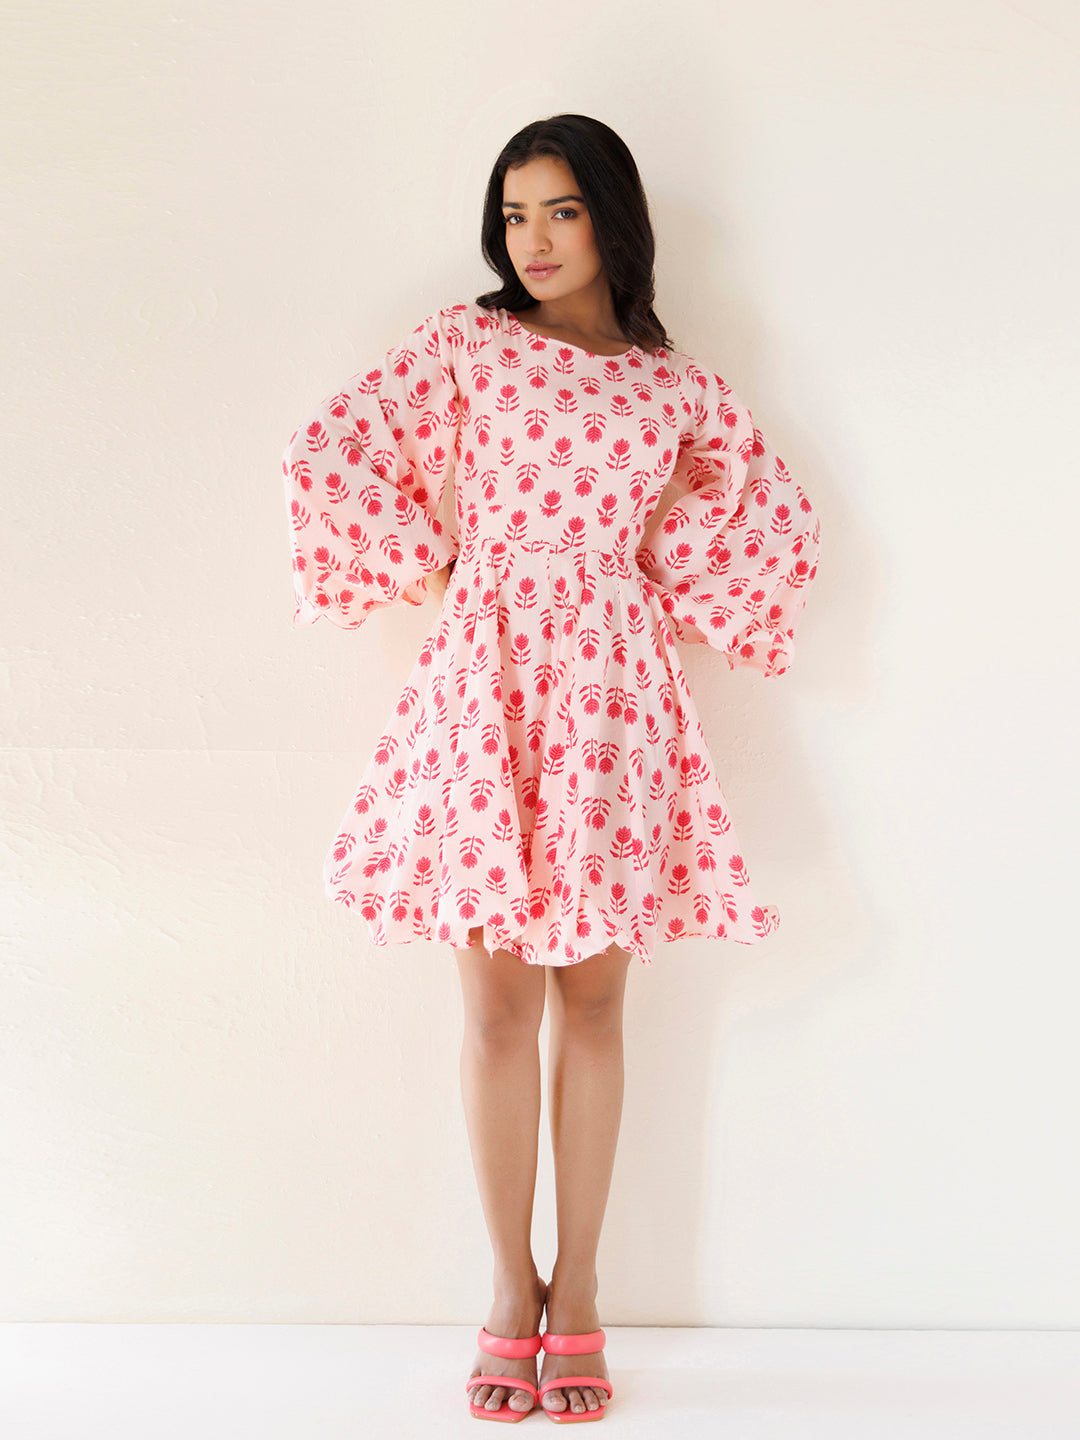 Calla Lily Pink Cotton Printed Dress by ragavi